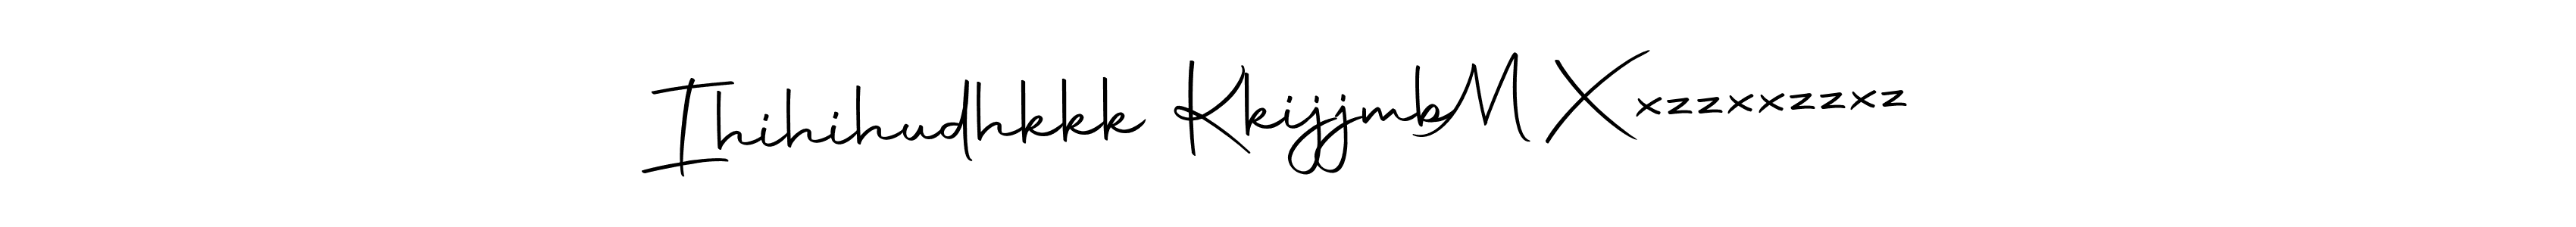 Also we have Ihihihudhkkk Kkijjmb  M Xxzzxxzzxz name is the best signature style. Create professional handwritten signature collection using Autography-DOLnW autograph style. Ihihihudhkkk Kkijjmb  M Xxzzxxzzxz signature style 10 images and pictures png